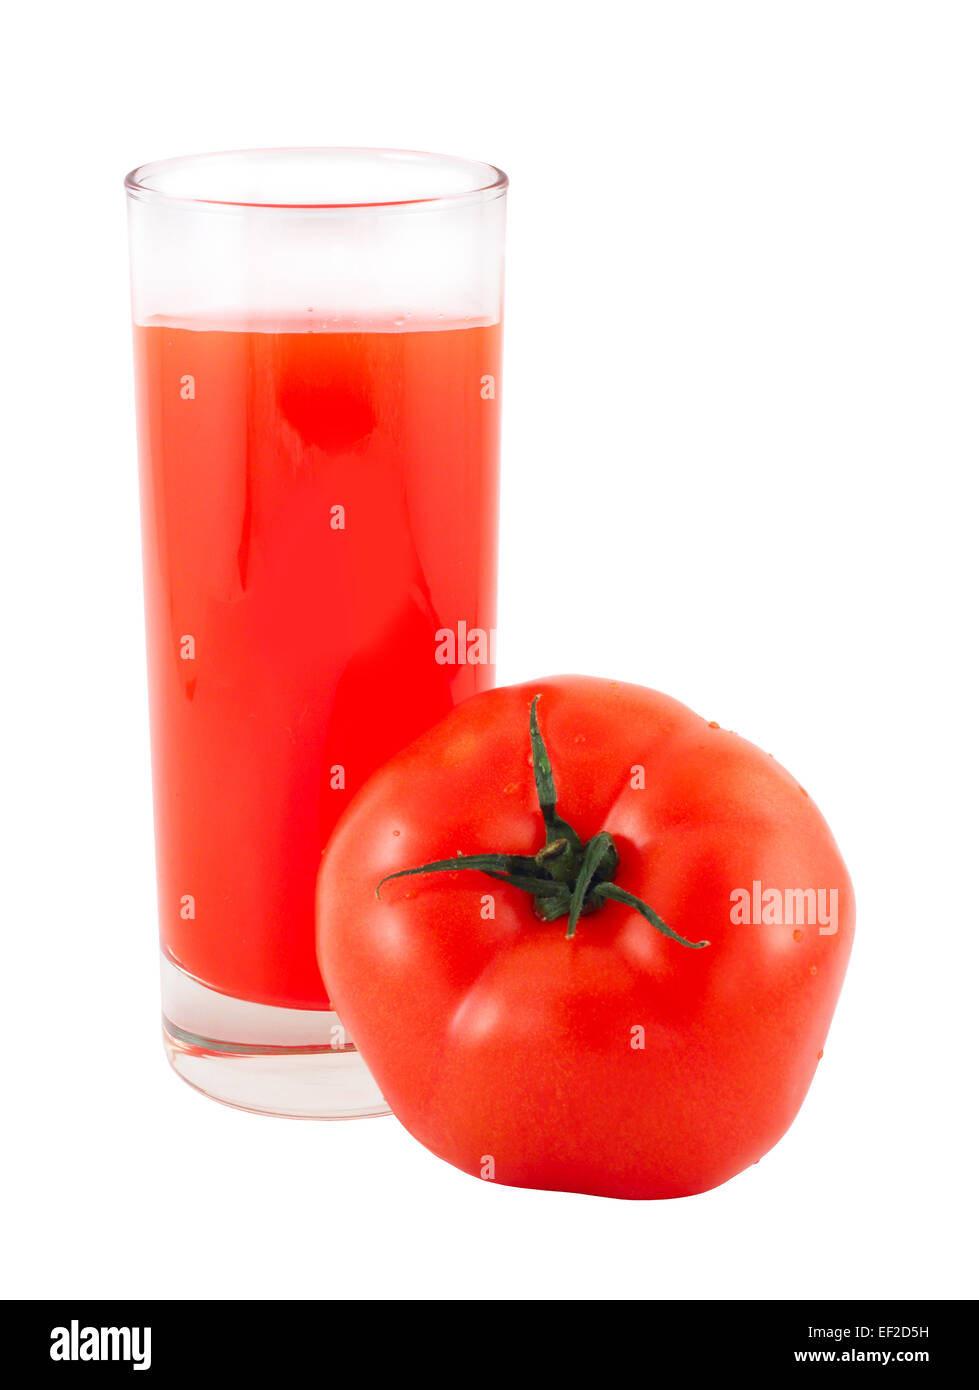 Juice and one tomato isolated on white background Stock Photo